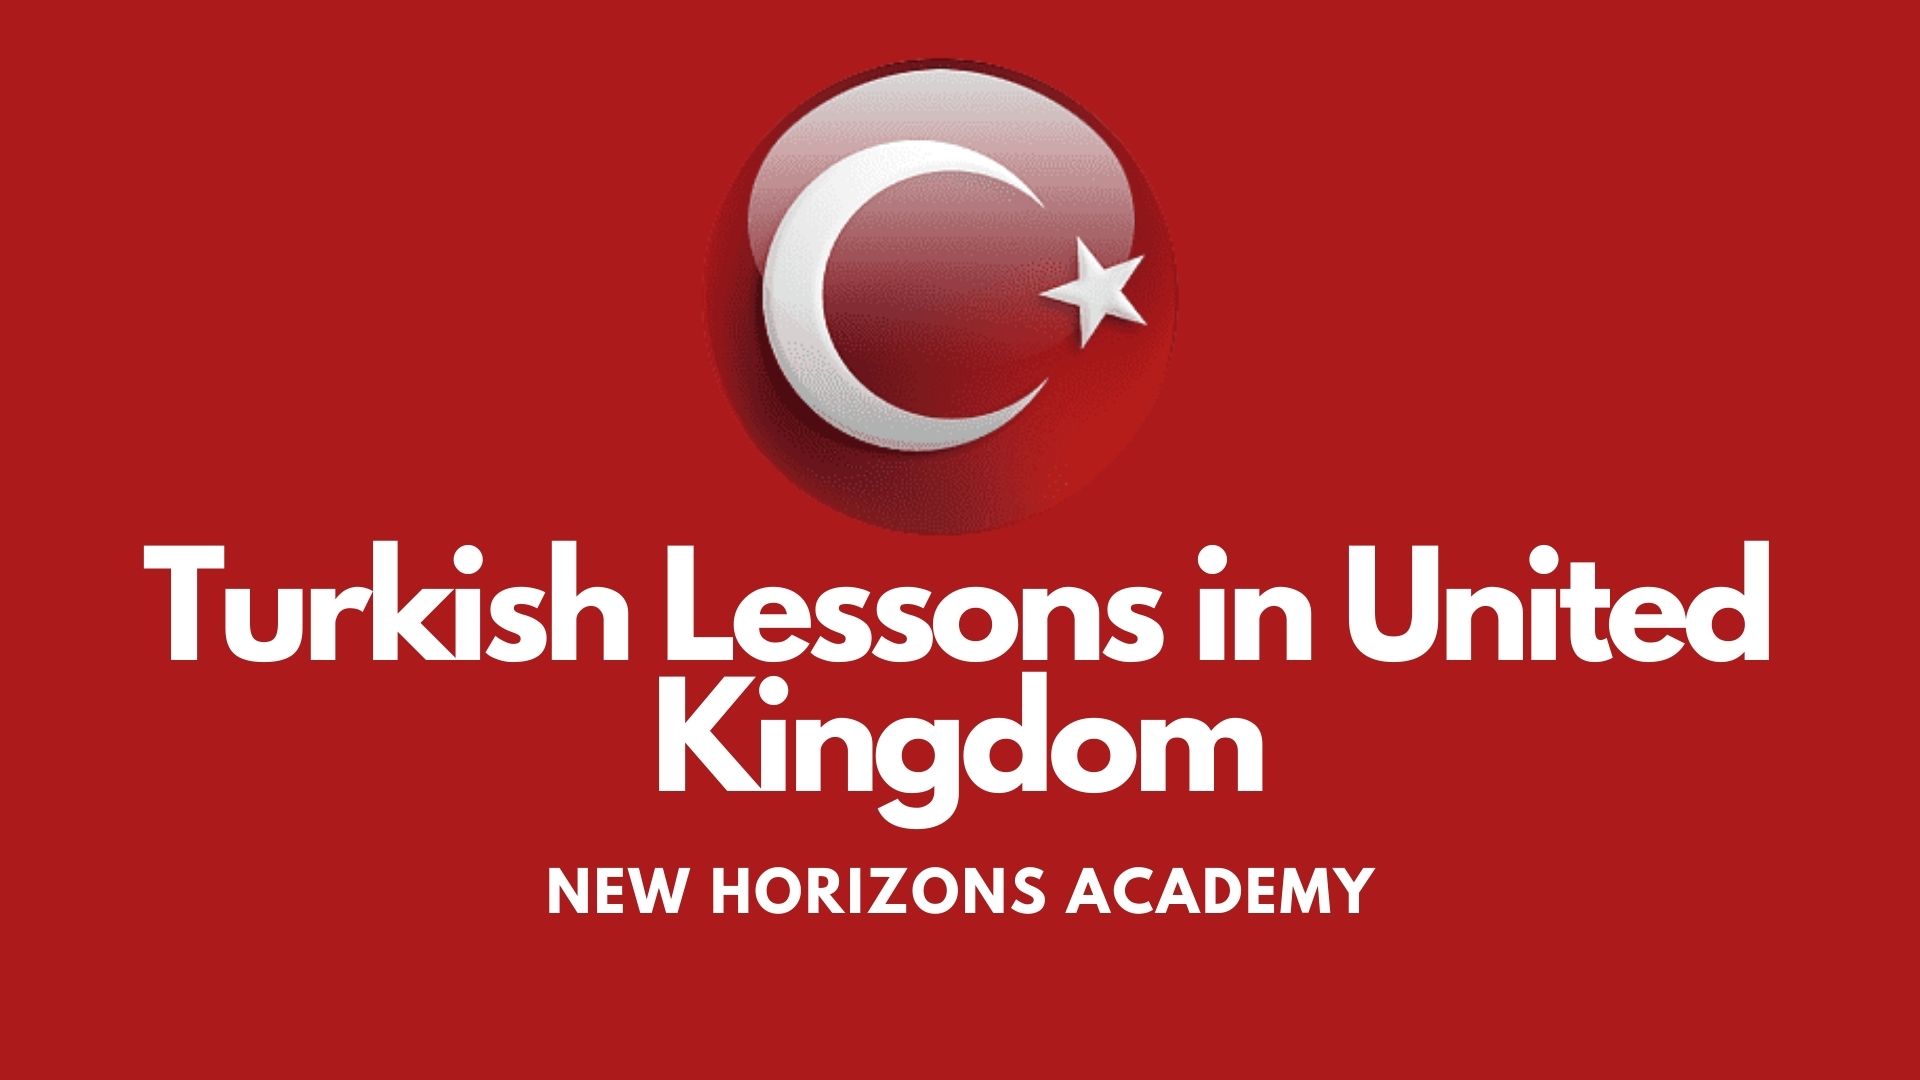 Turkish lessons in United Kingdom